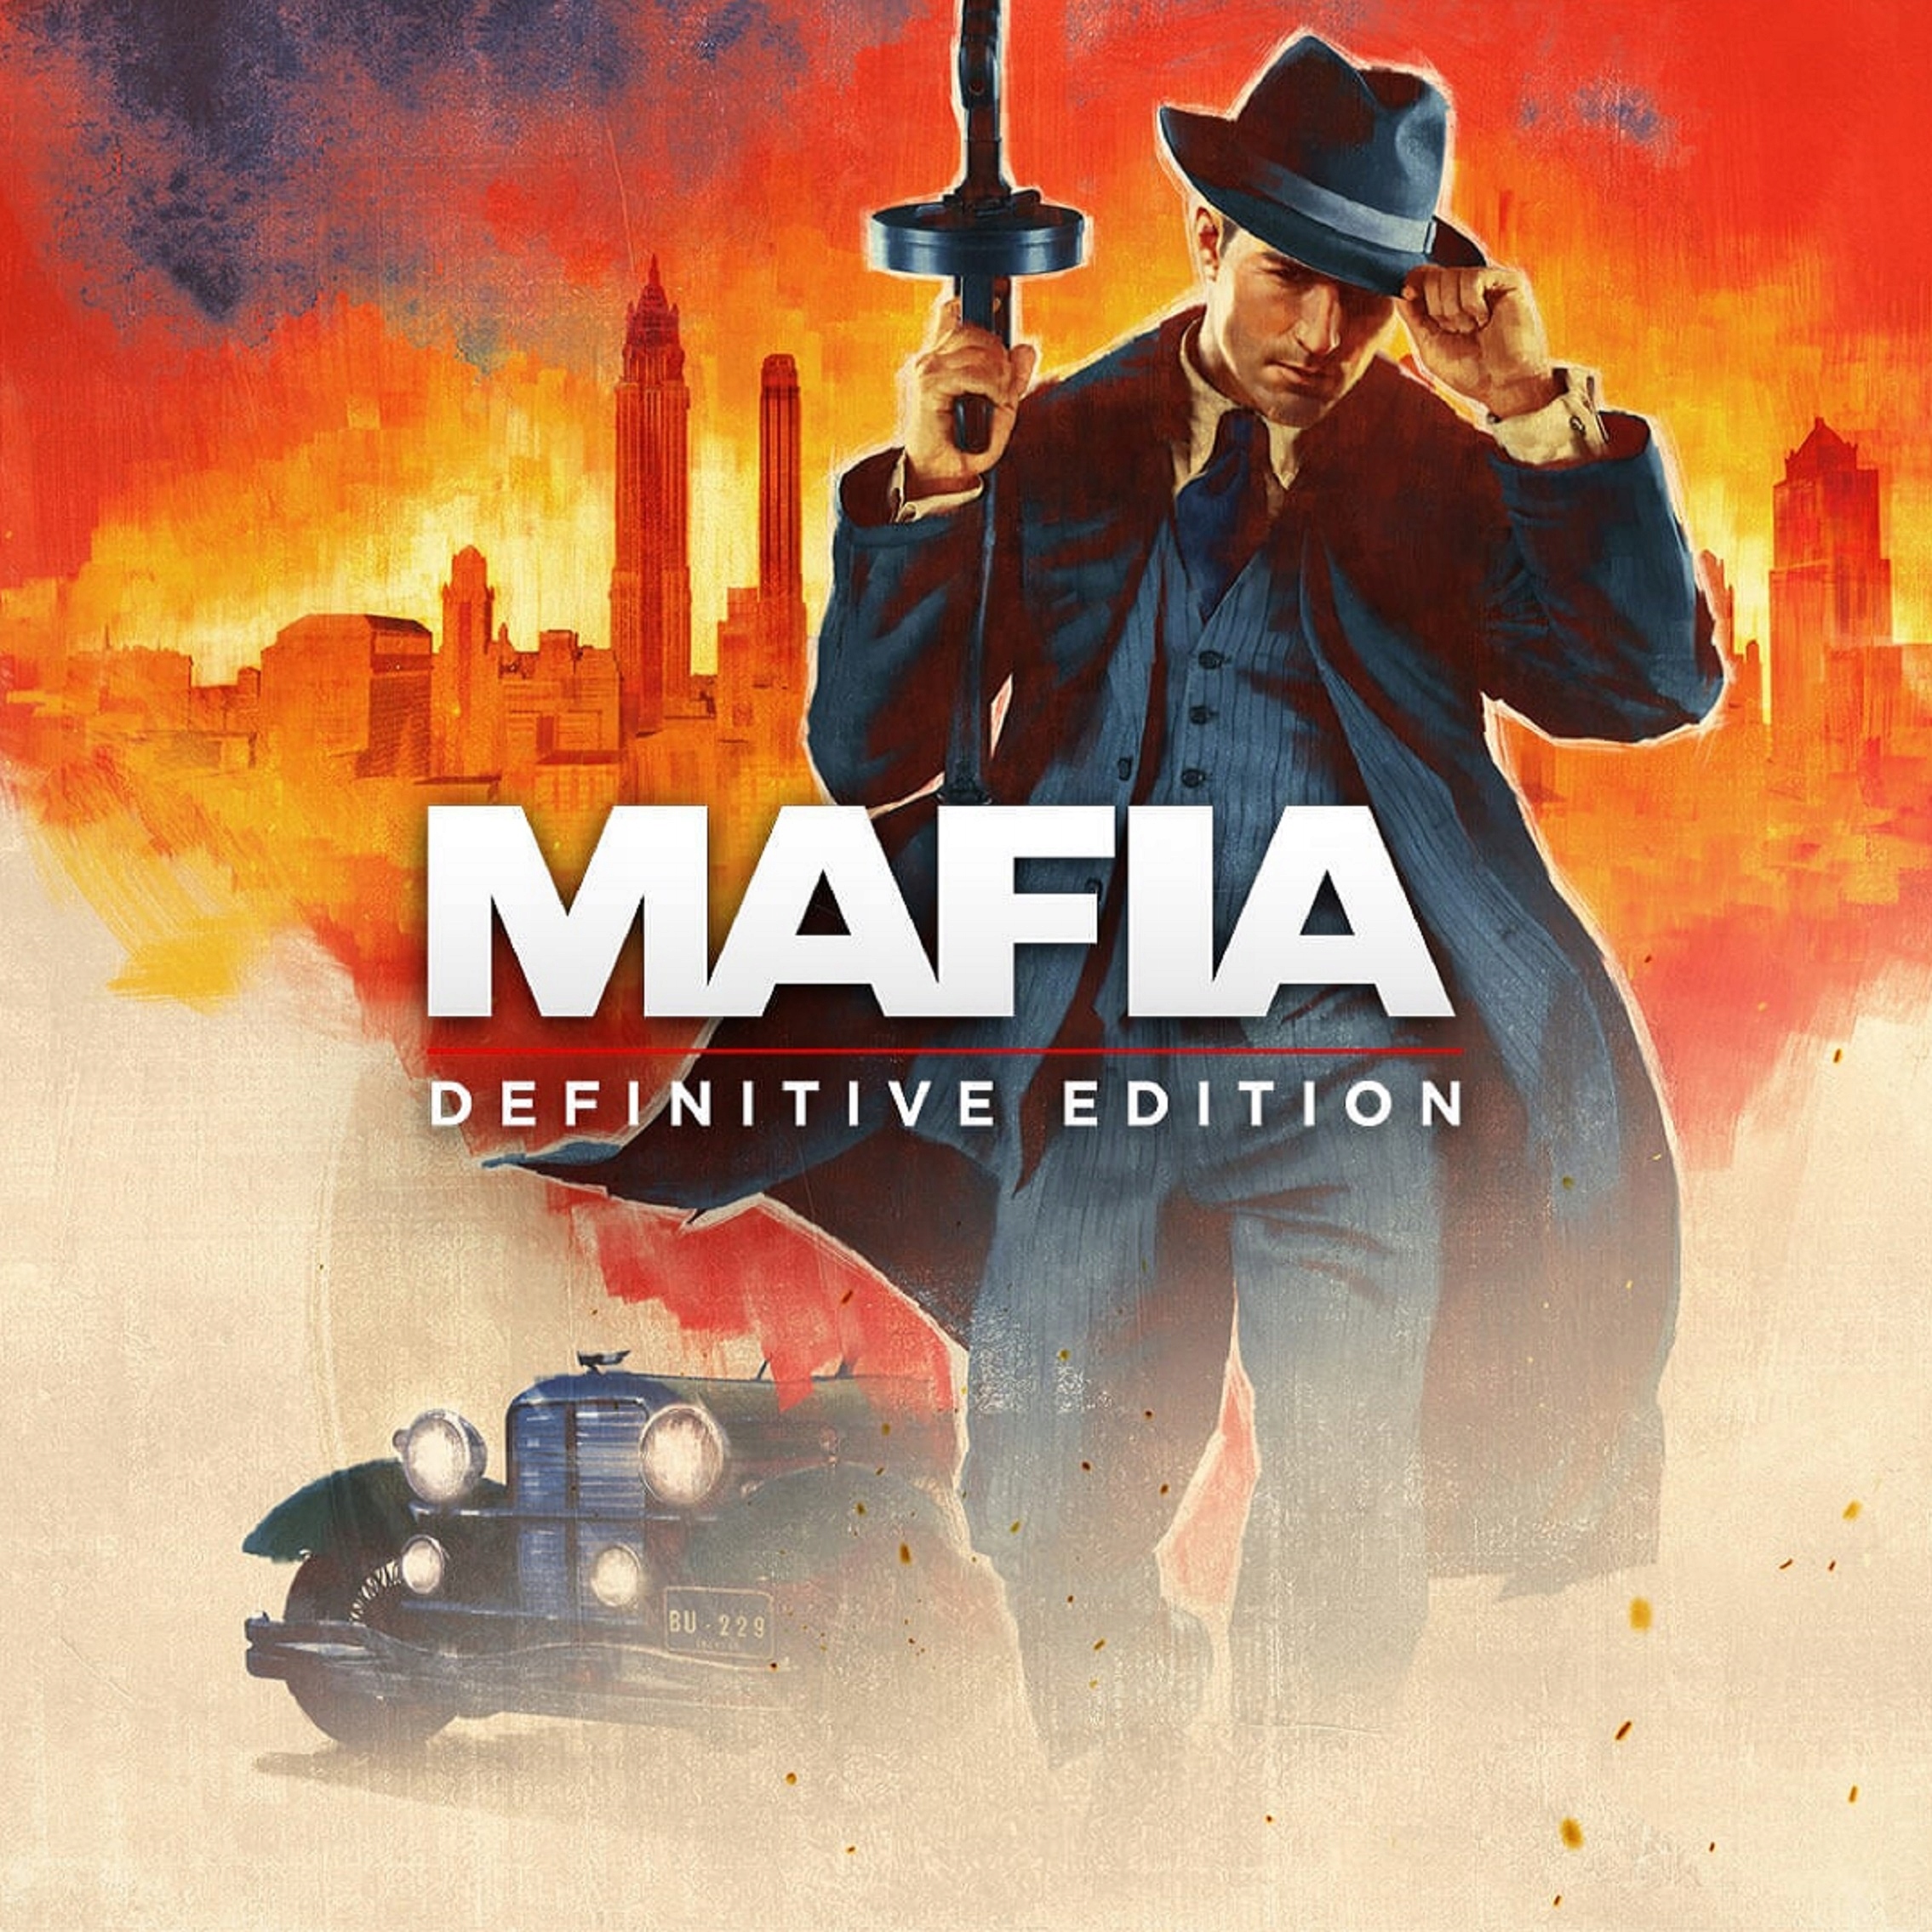 Мафия дефинитив эдишн на русском. Mafia 1 Definitive Edition. Mafia 1 Remake. Mafia Definitive Edition icon. Mafia трилогия.